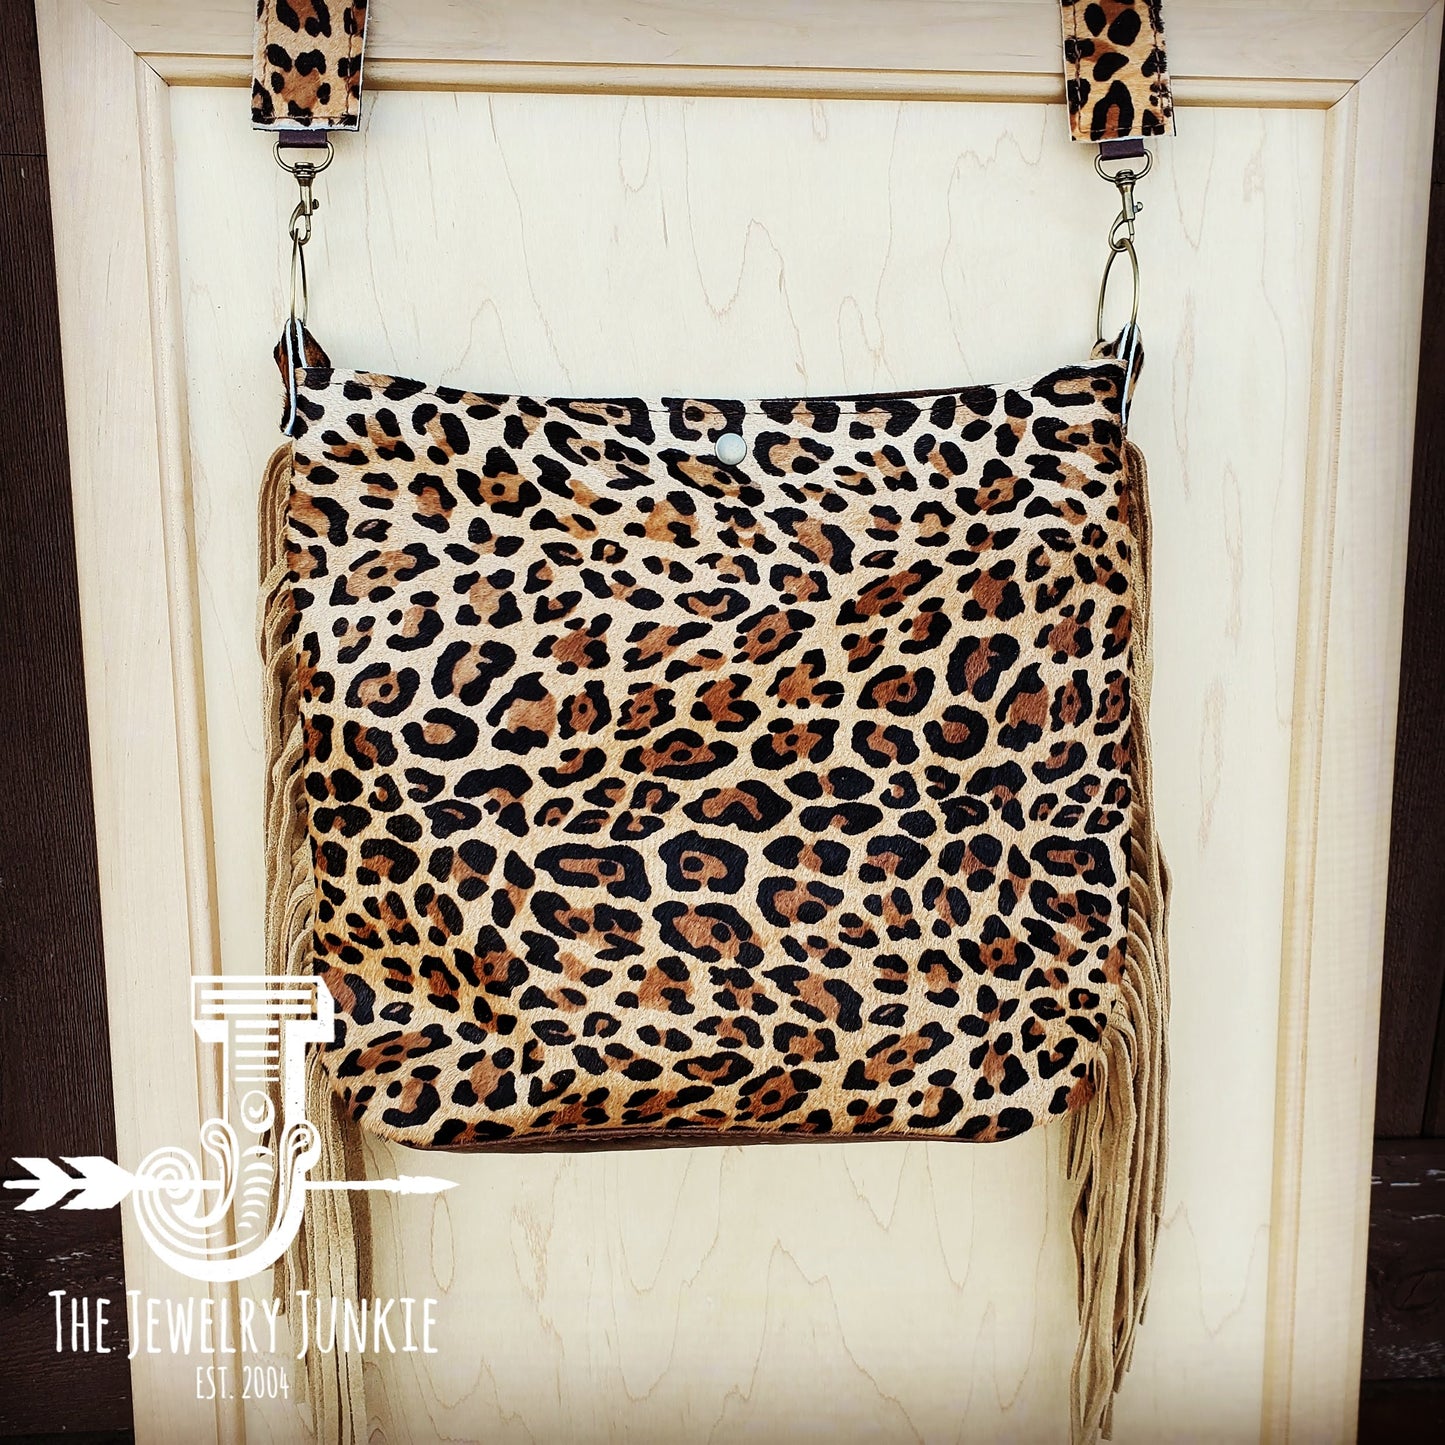 Tejas Leather Bucket Leopard Handbag with Tan Fringe 505h